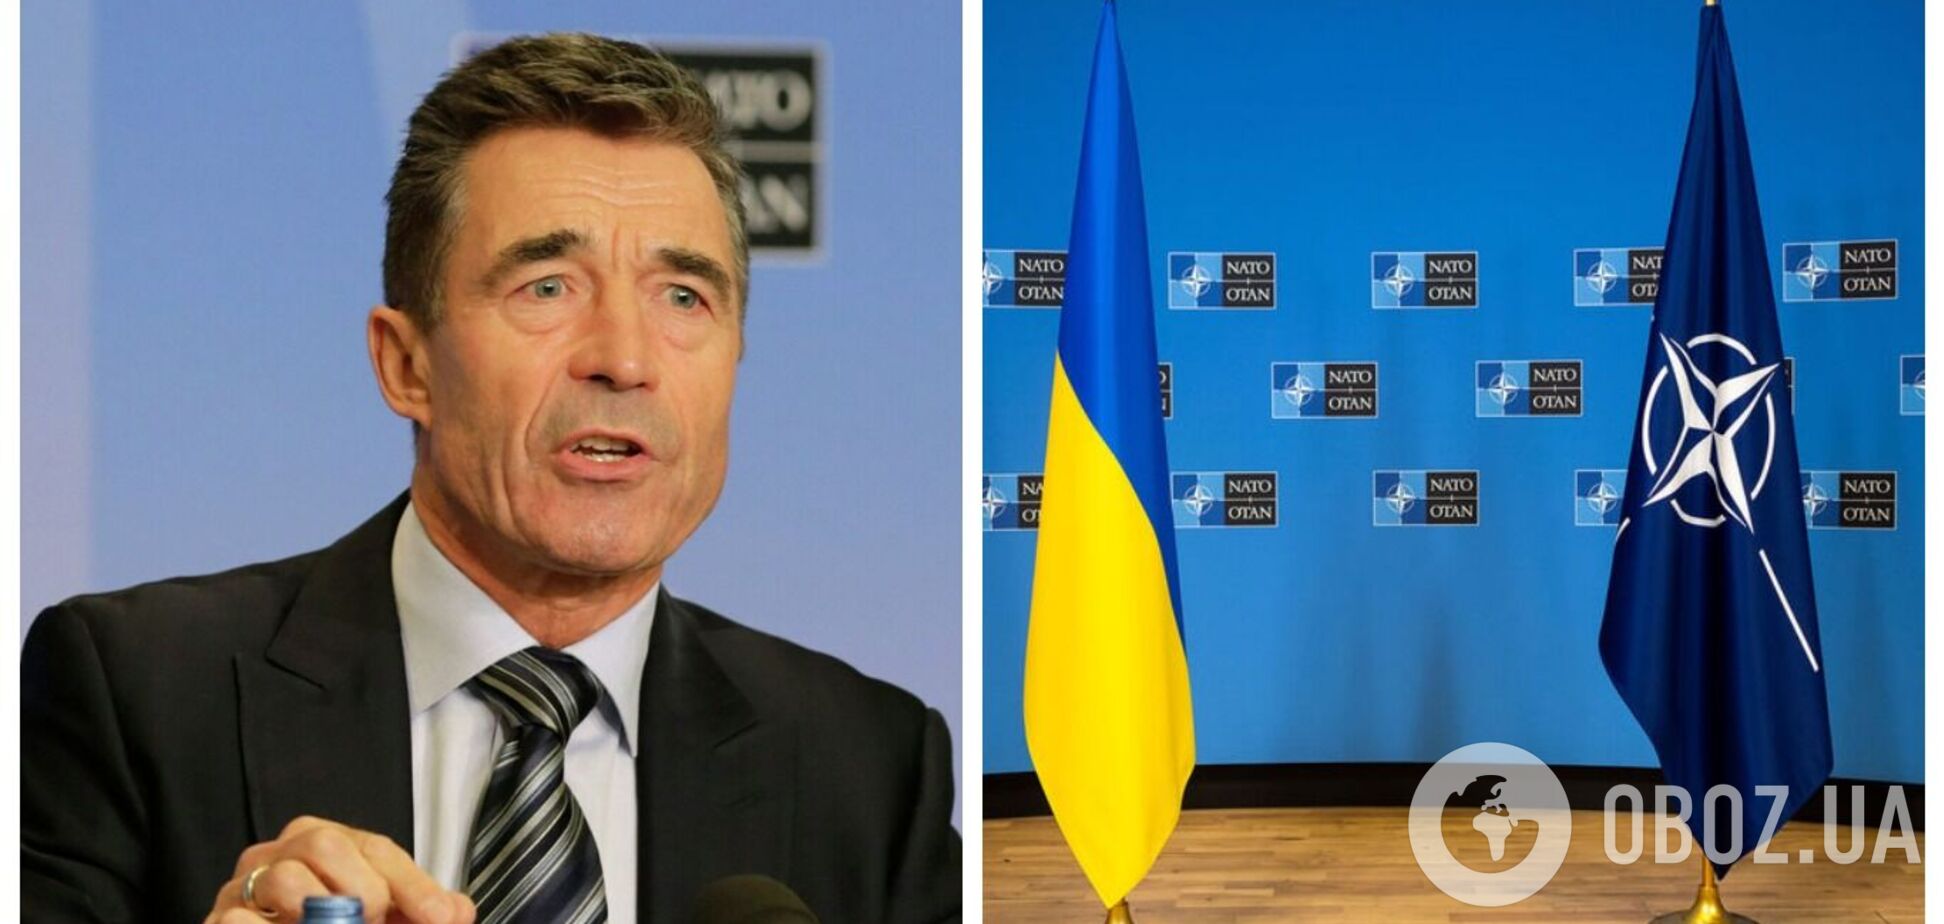 Запрошення України в НАТО може сприяти забезпеченню миру, – Расмуссен